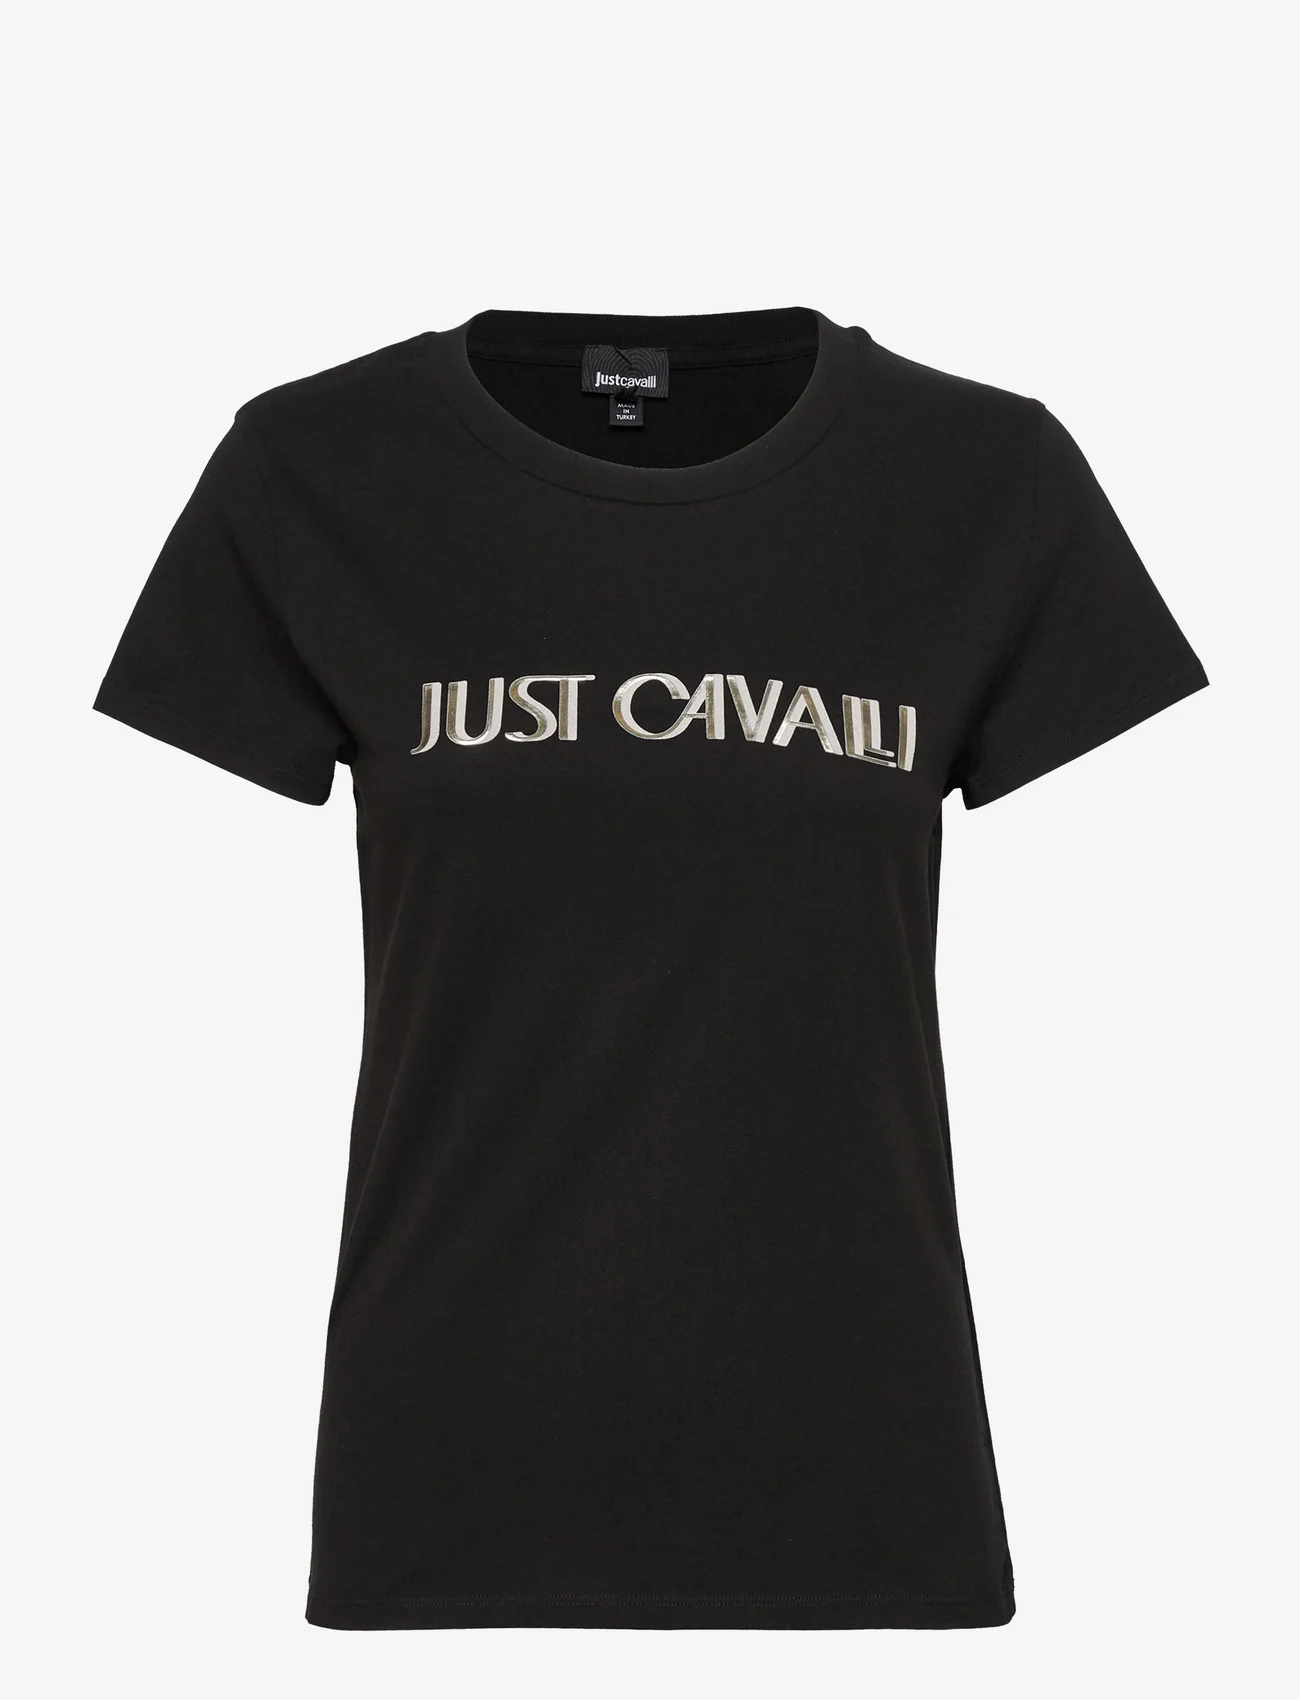 Just Cavalli - T-SHIRT - t-skjorter - black - 0